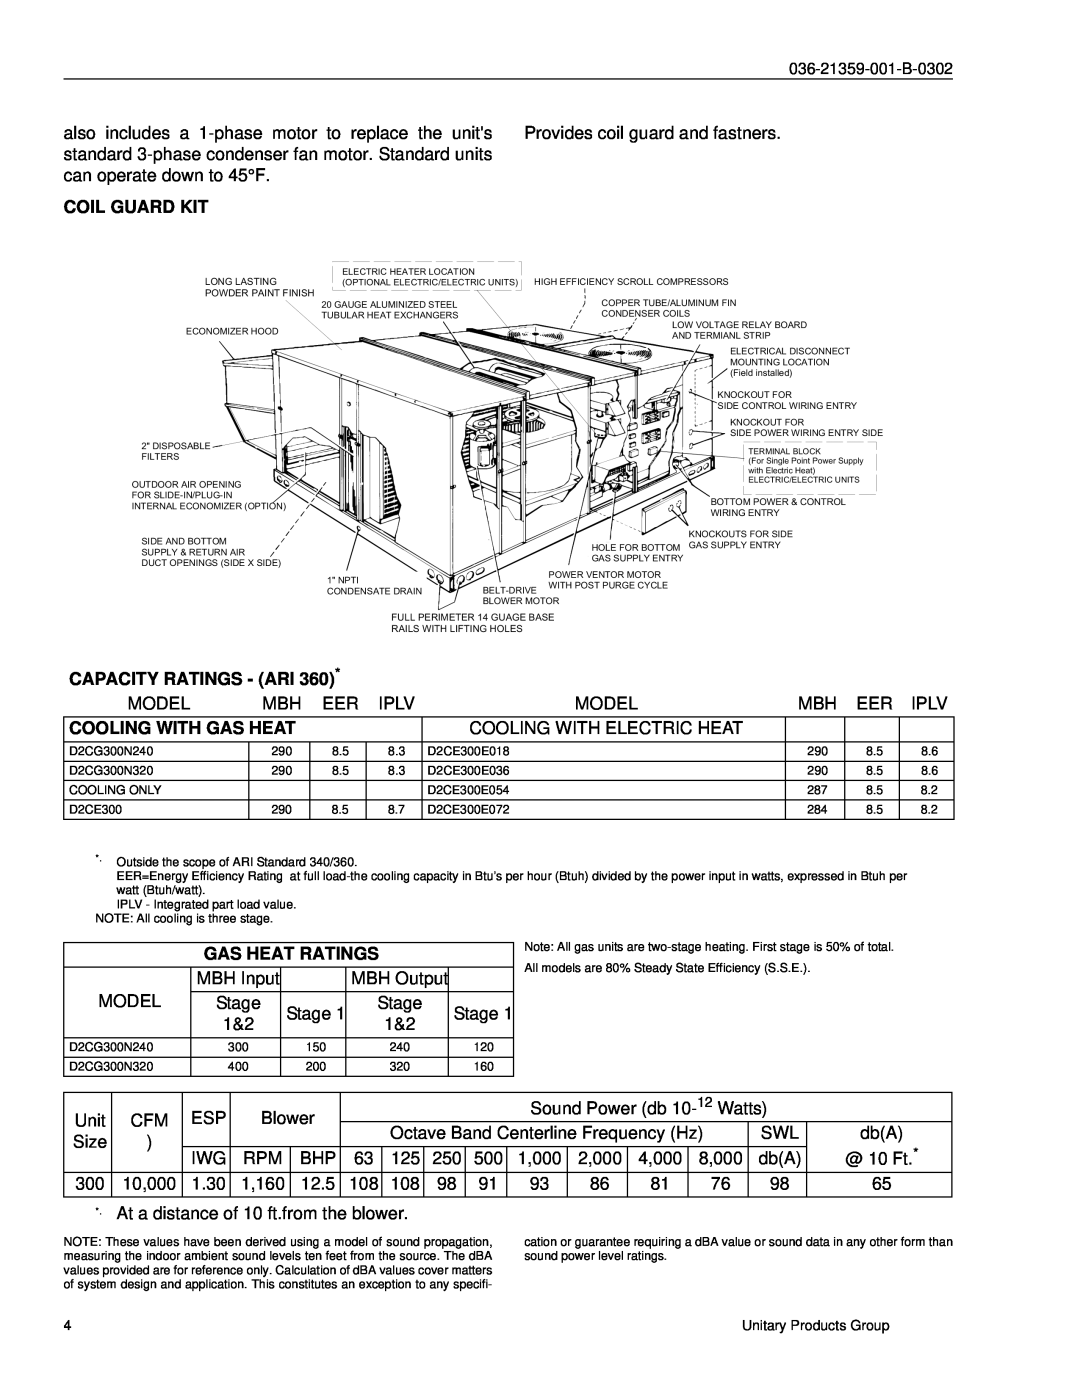 York D2CE, D2CG manual Coil Guard Kit, Capacity Ratings - Ari, Cooling With Gas Heat, Gas Heat Ratings 